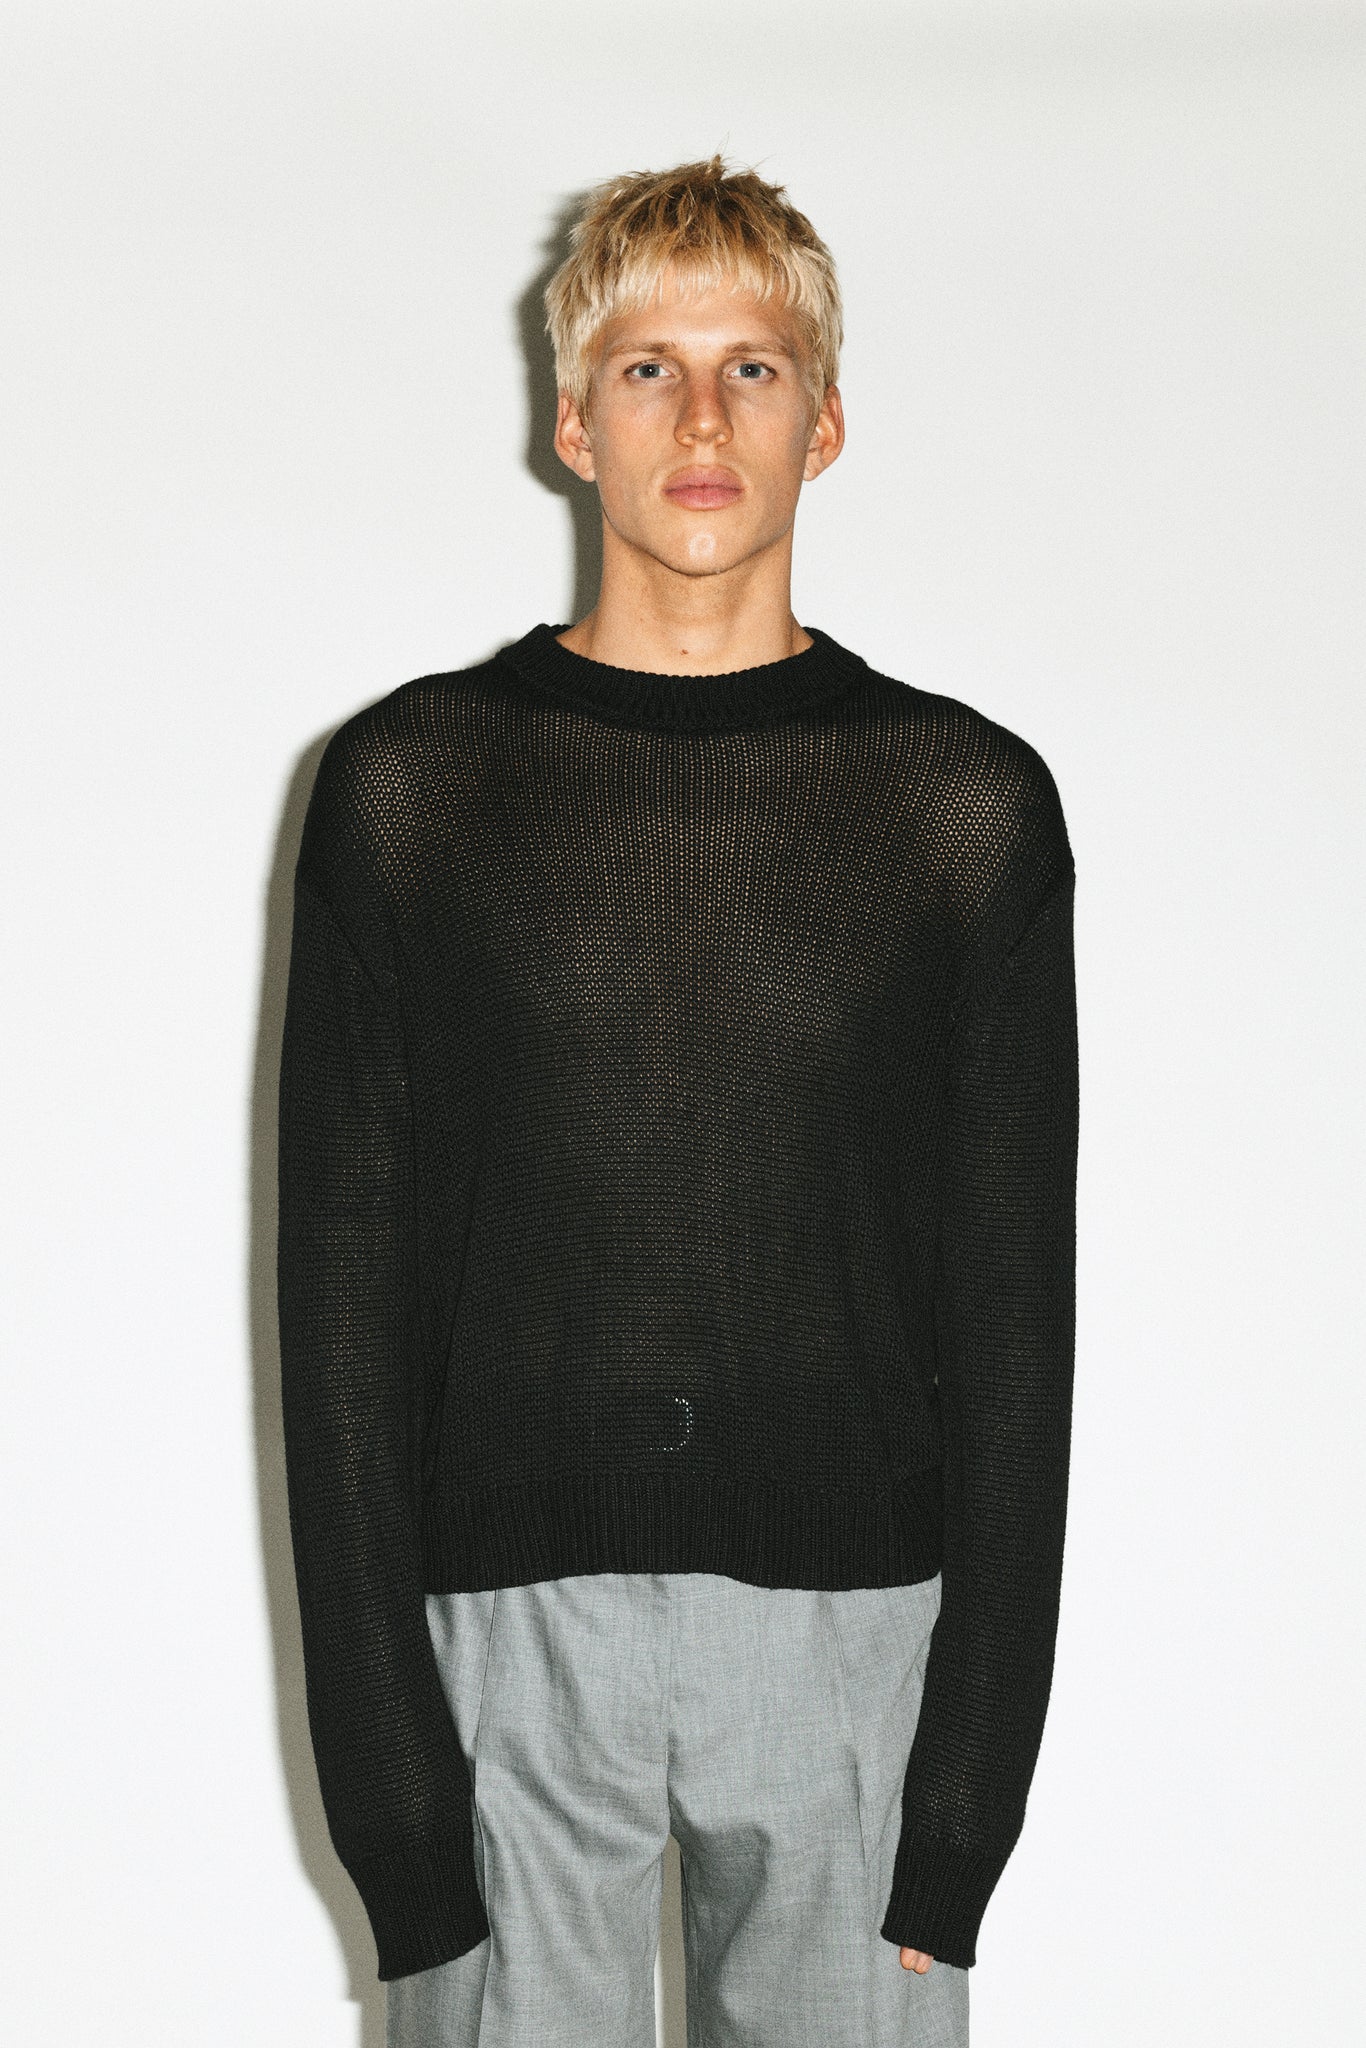 Vicente Open-Weave Sweater  |  Black